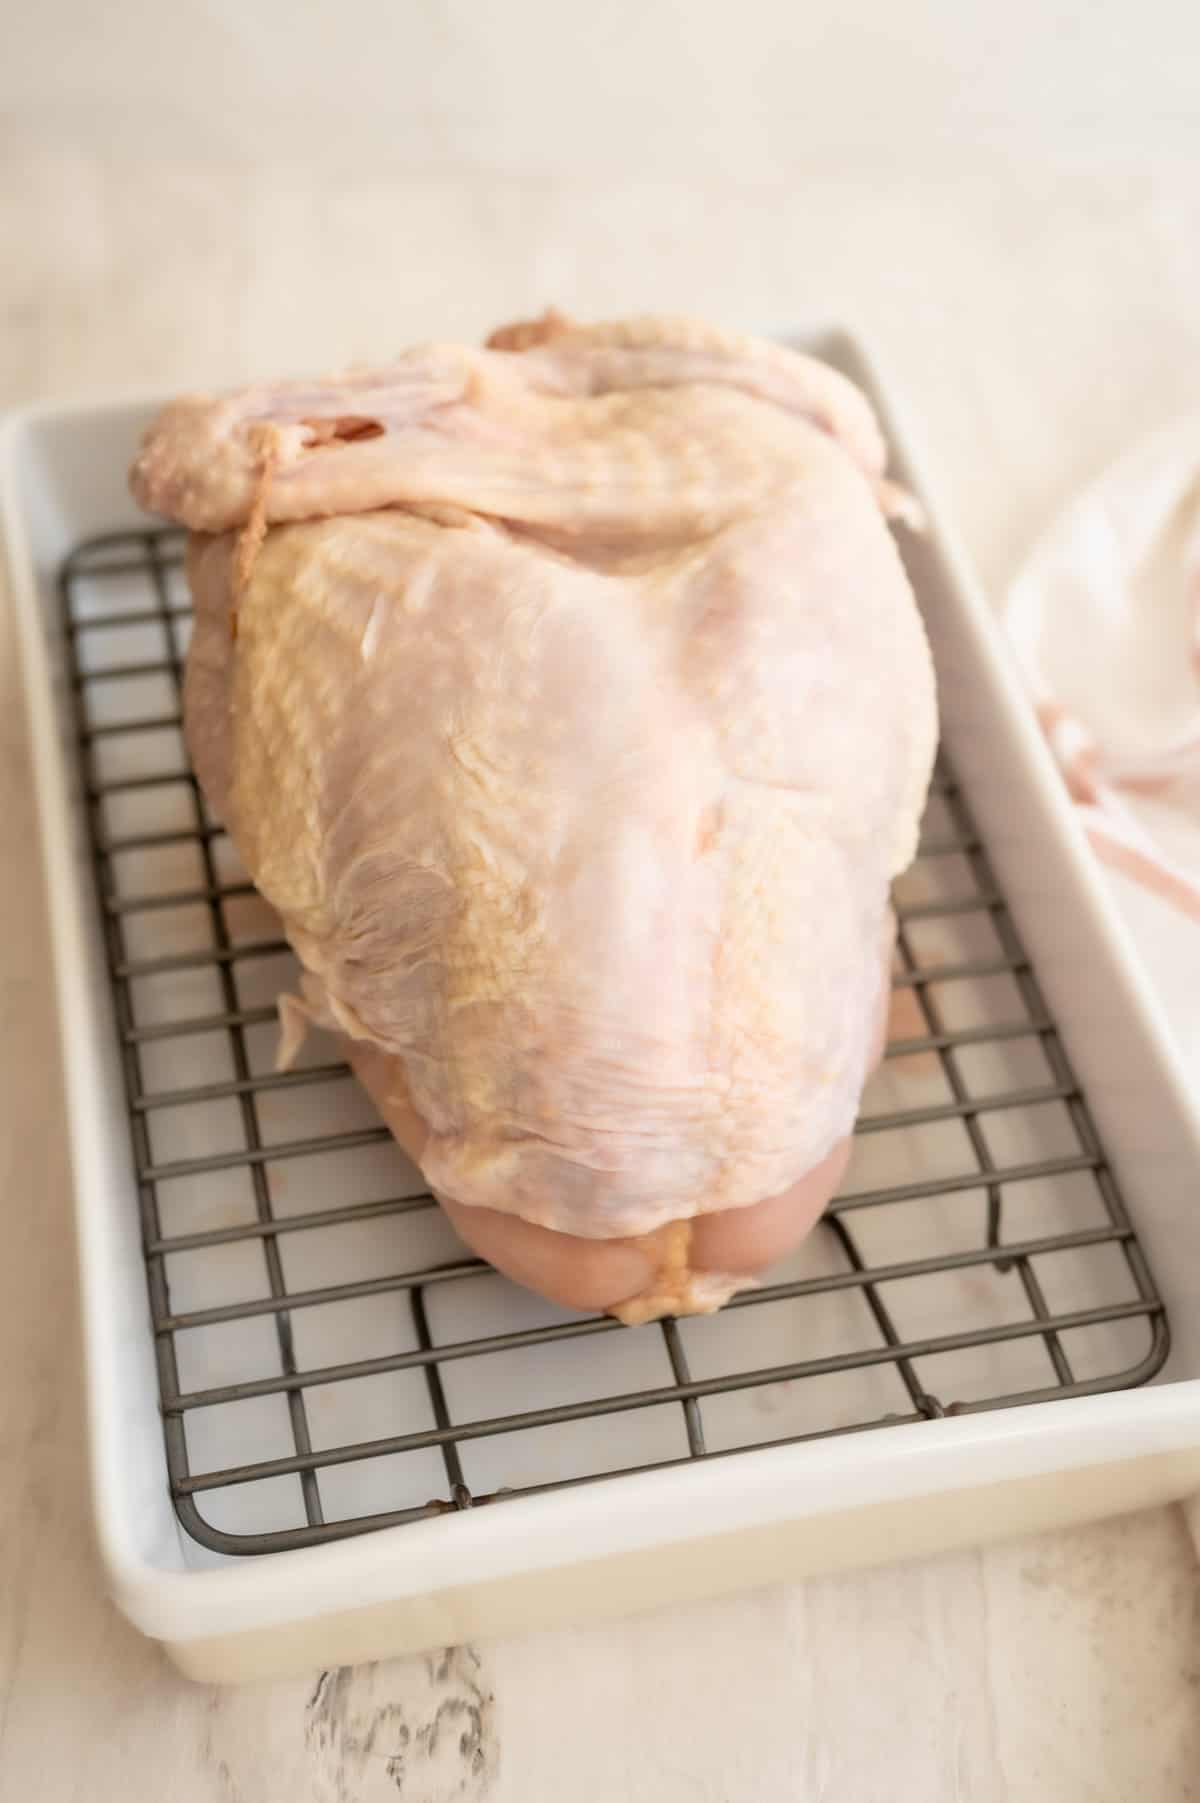 Bone-in turkey breast on a rack in a white roasting dish.